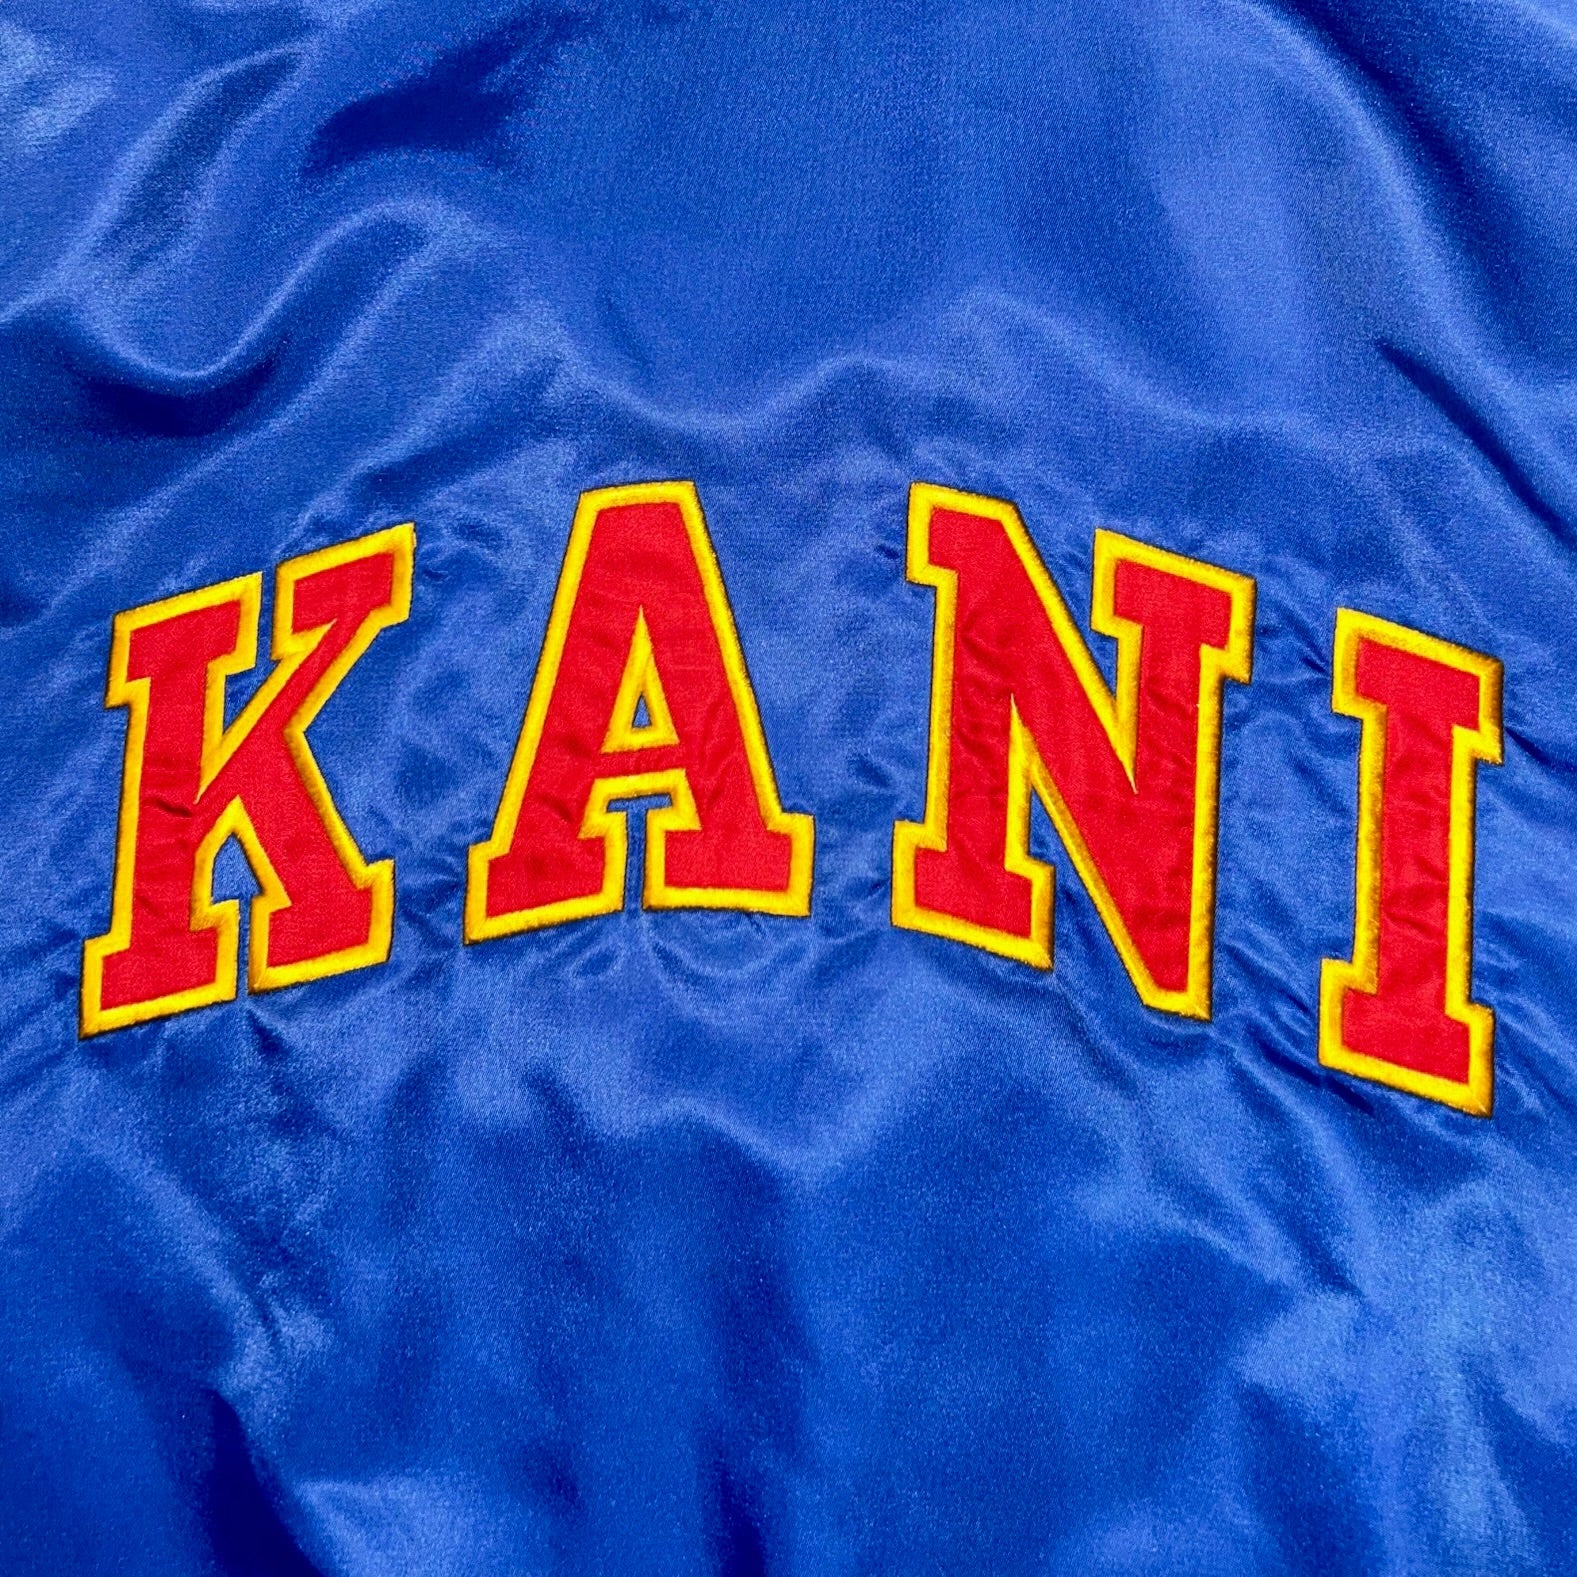 Karl Kani Outwear Vintage Bomber Jacket (XL/XXL)